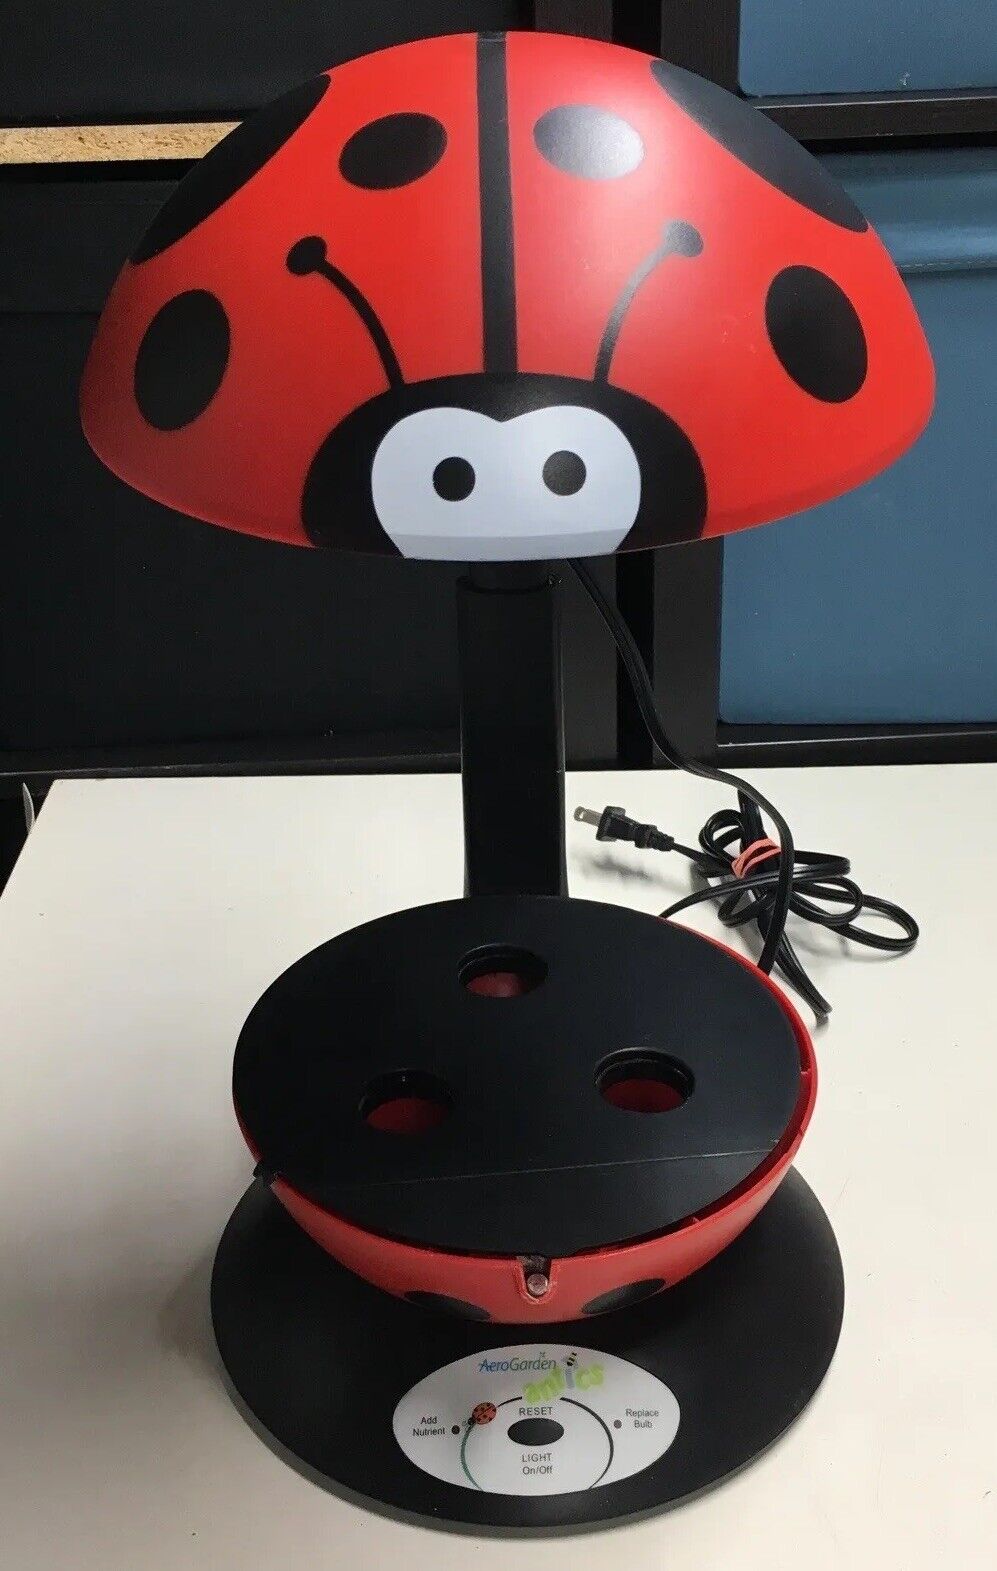 Aerogarden Antics Rare Ladybug Design Grow Lamp System, Tested Works